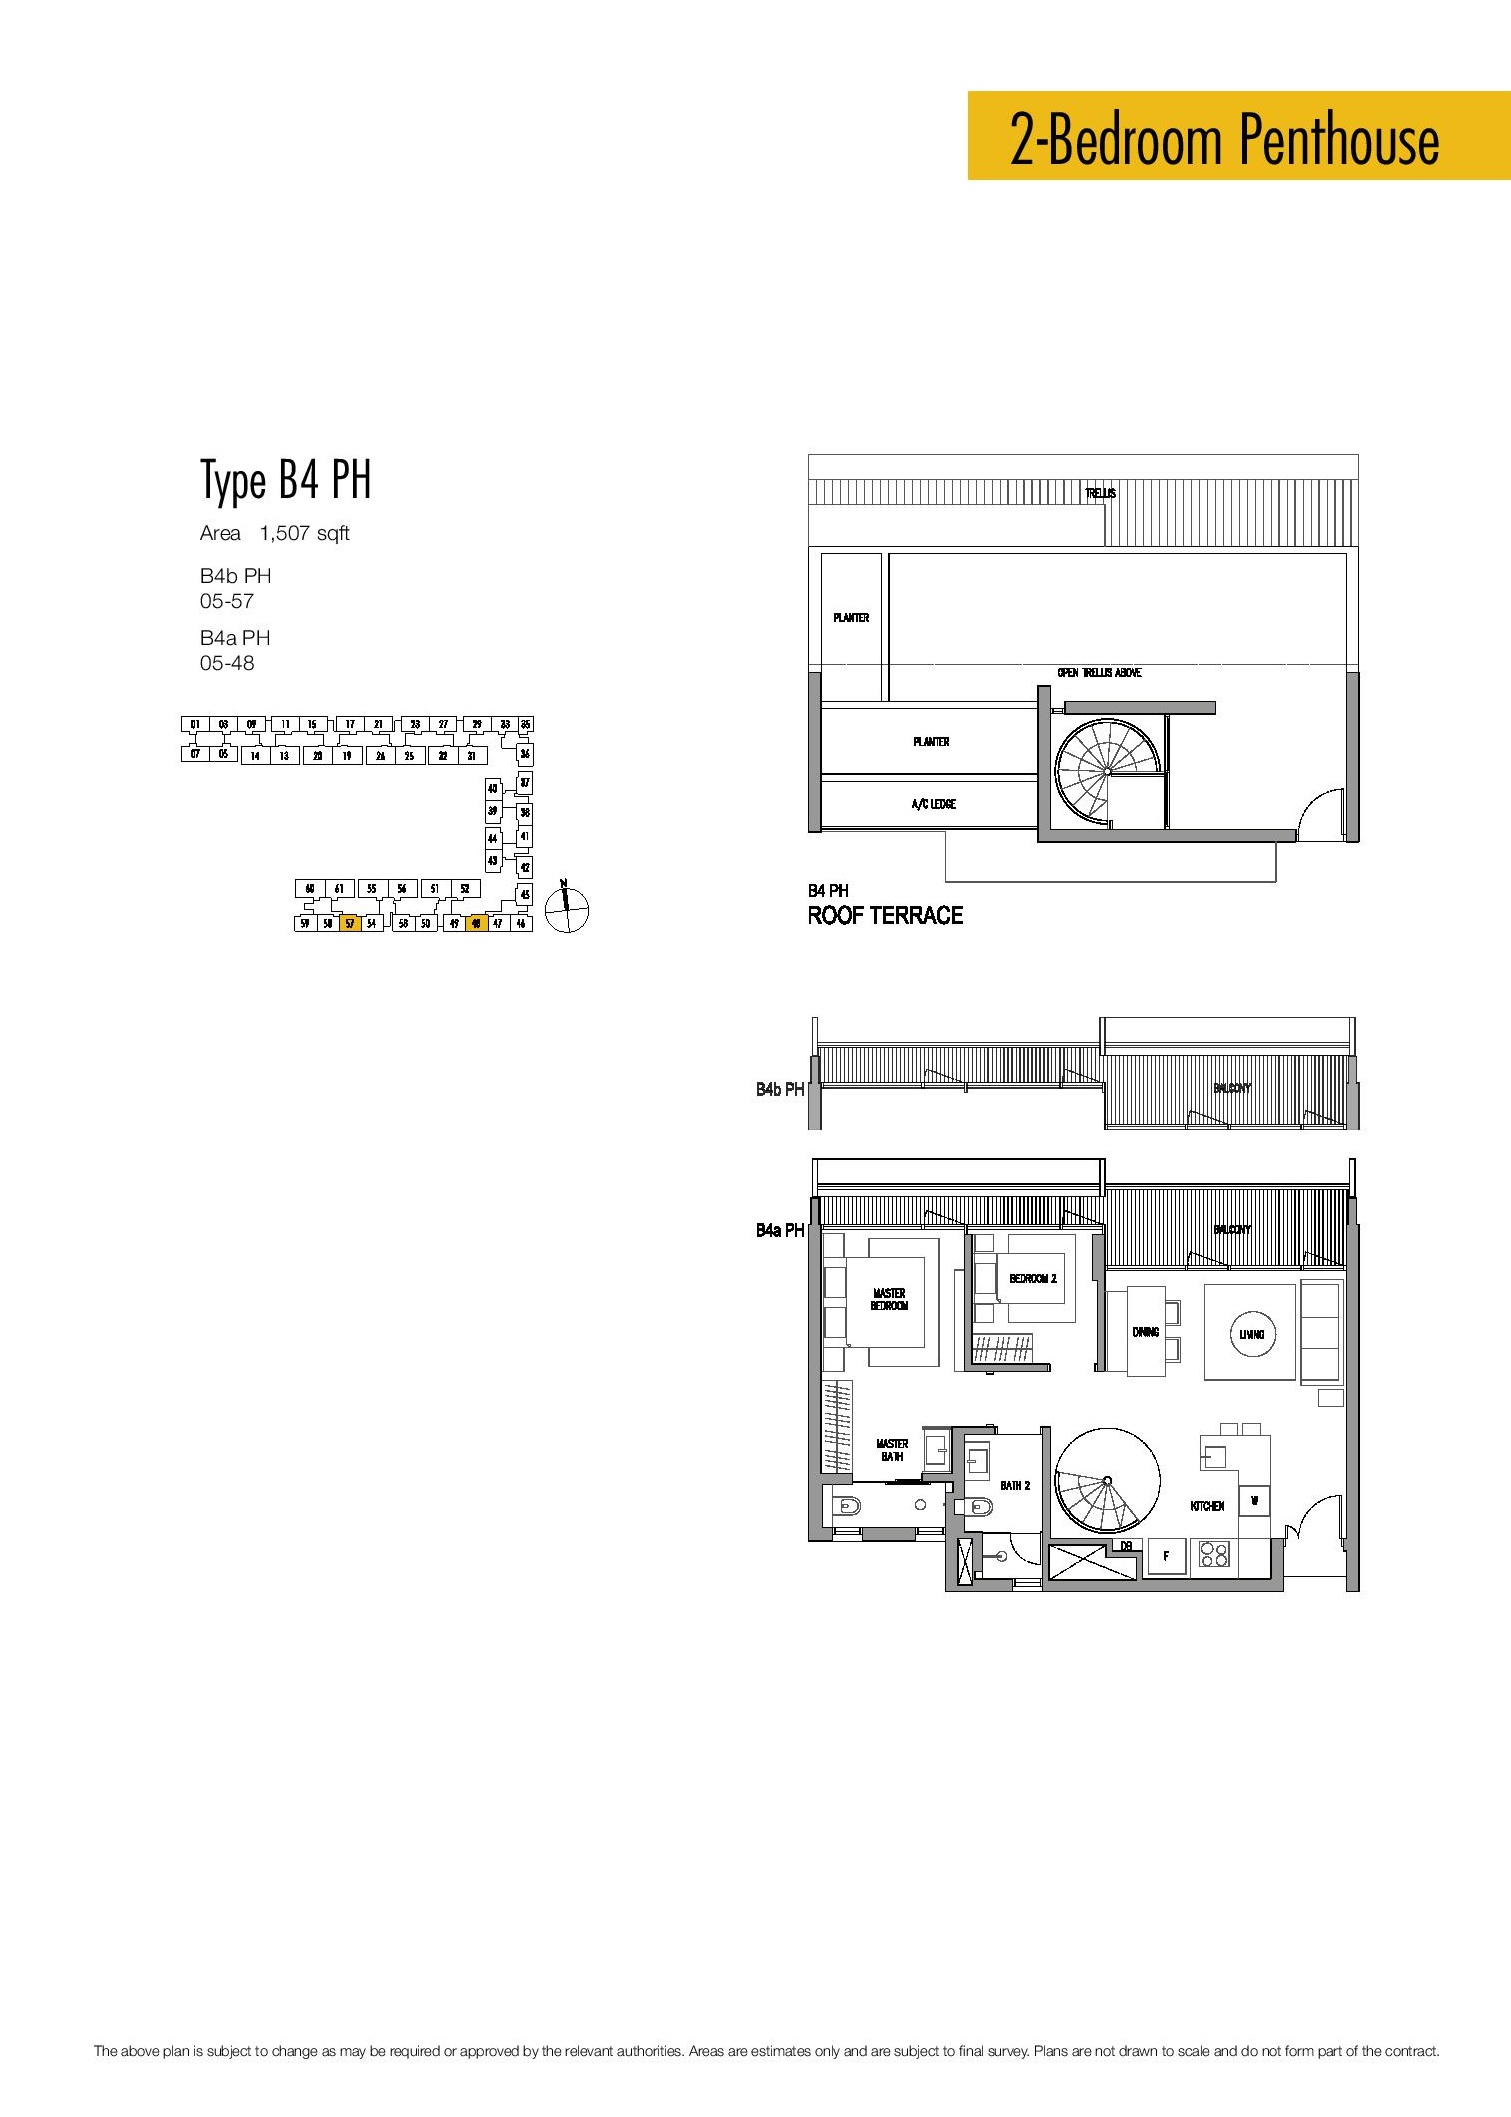 Seletar Park Residence 2 Bedroom Penthouse Type B4 PH Floor Plans